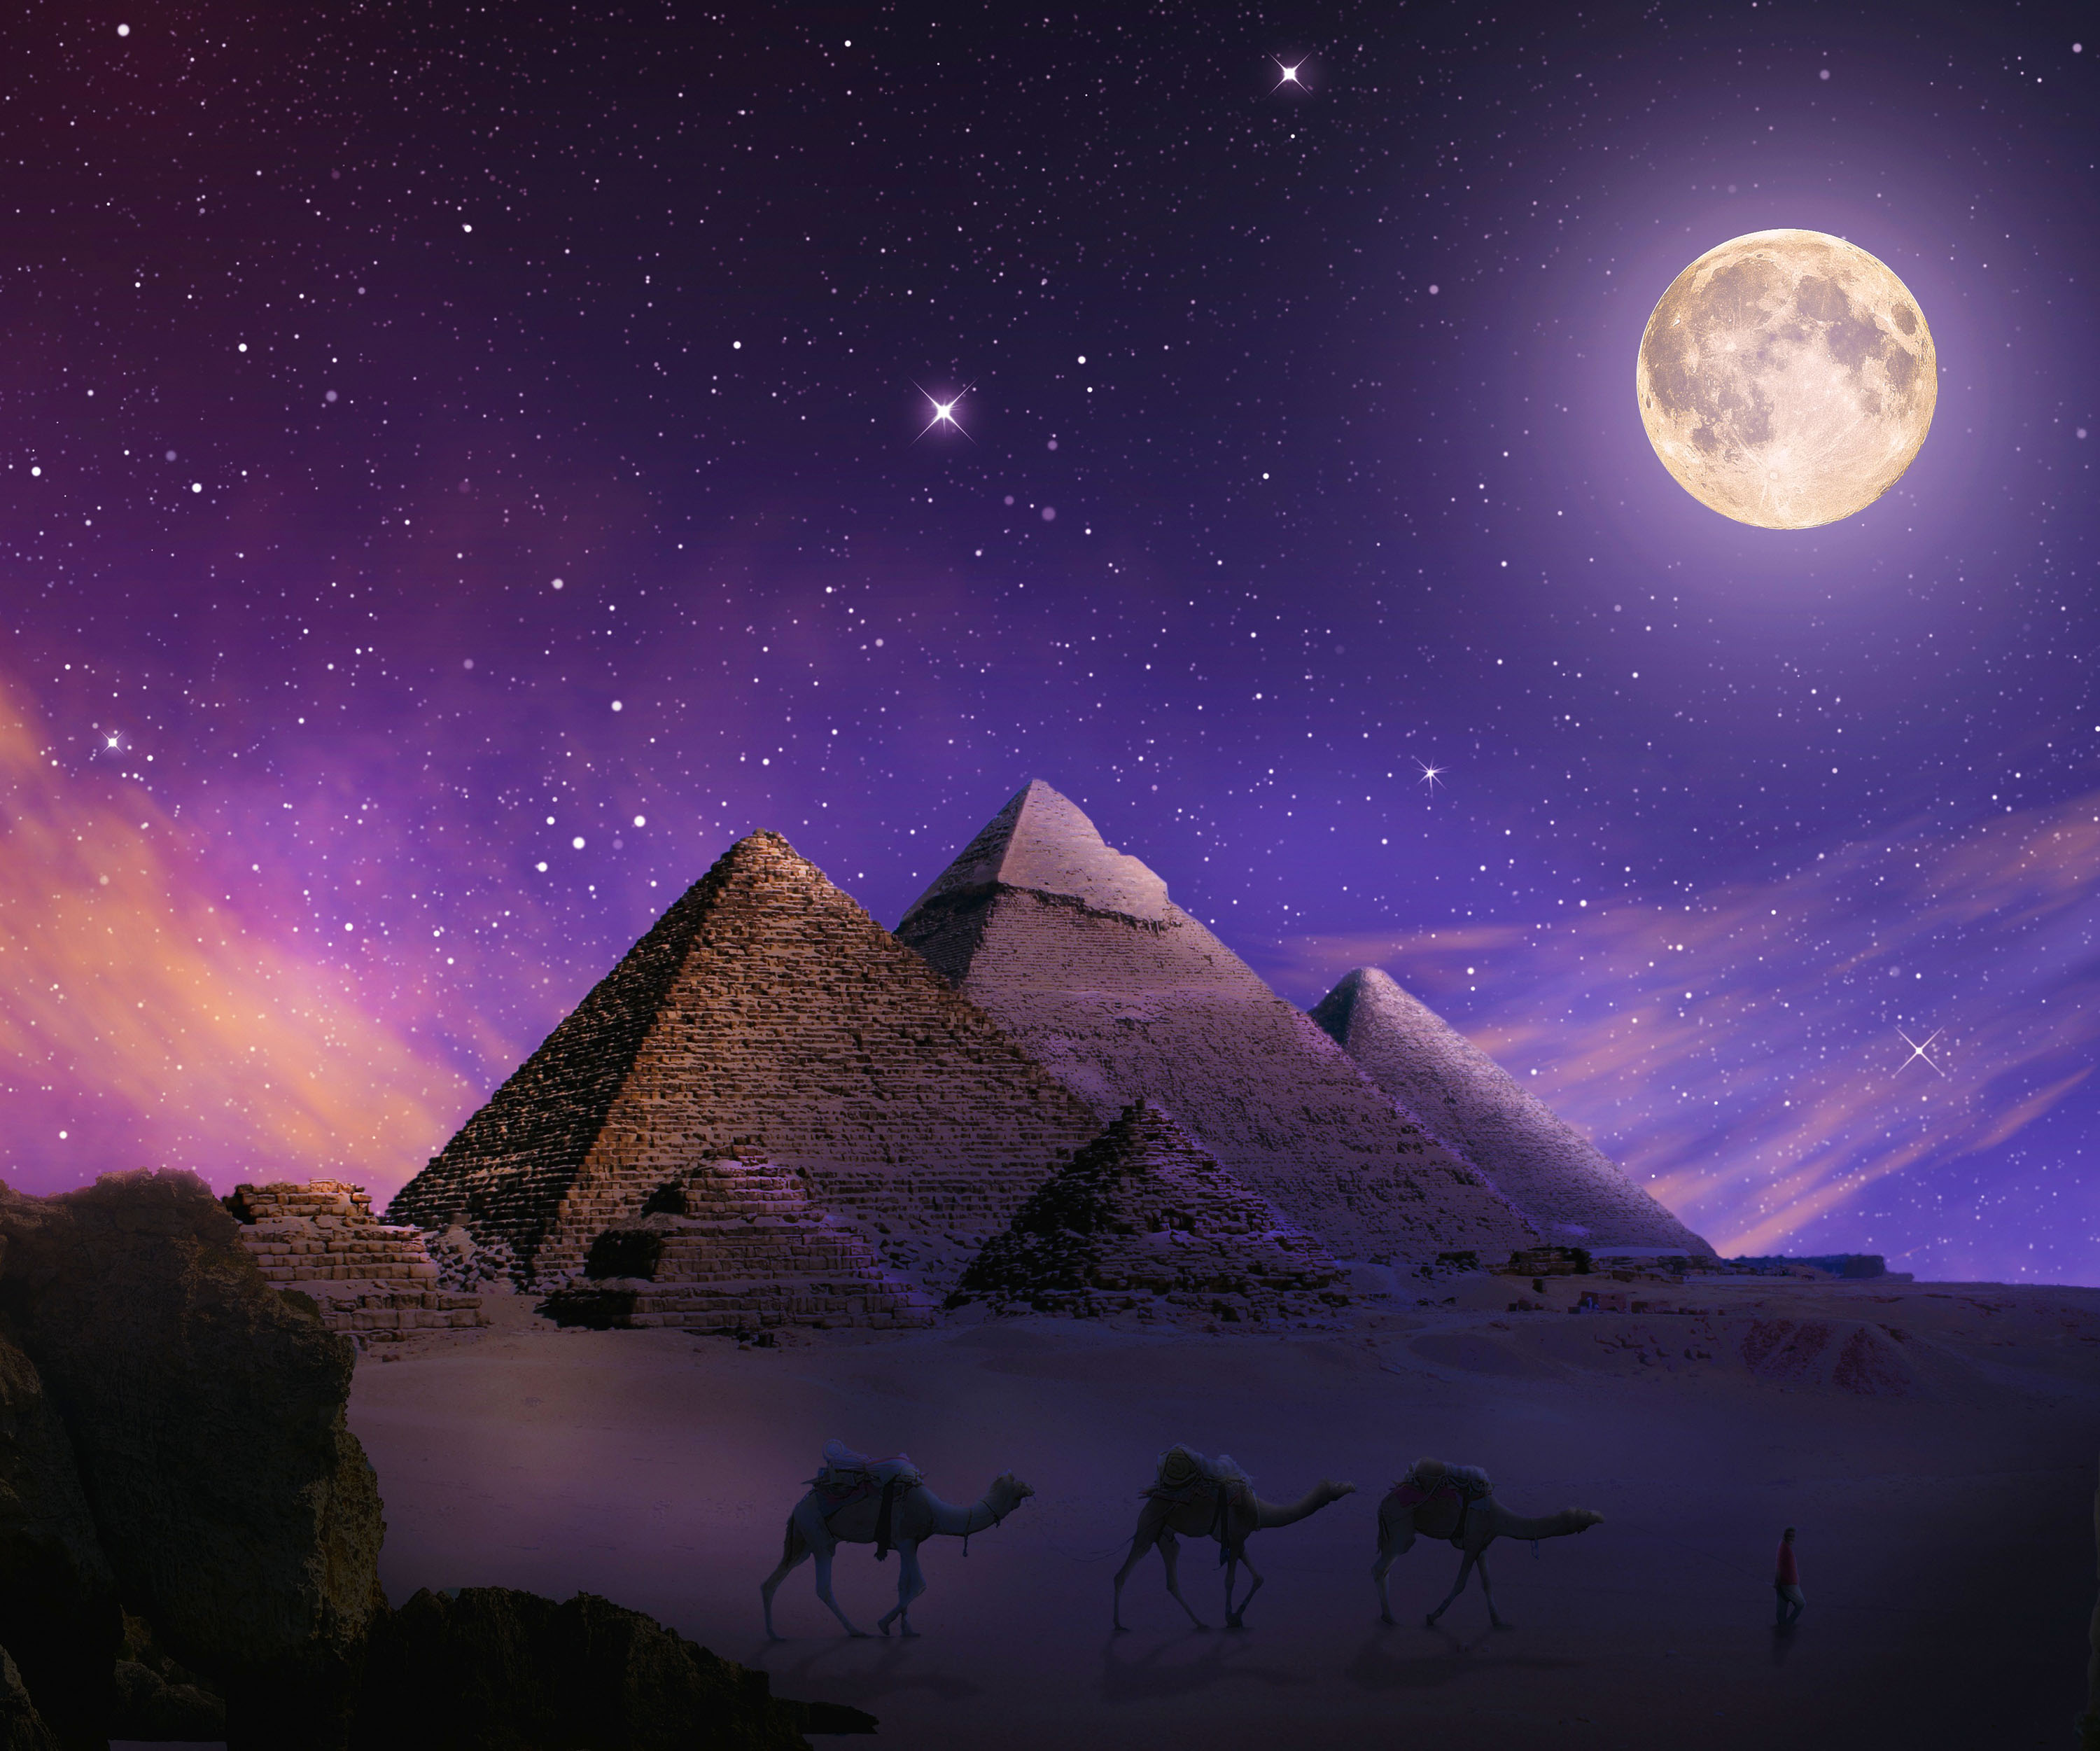 egypt, pyramid, man made, camel